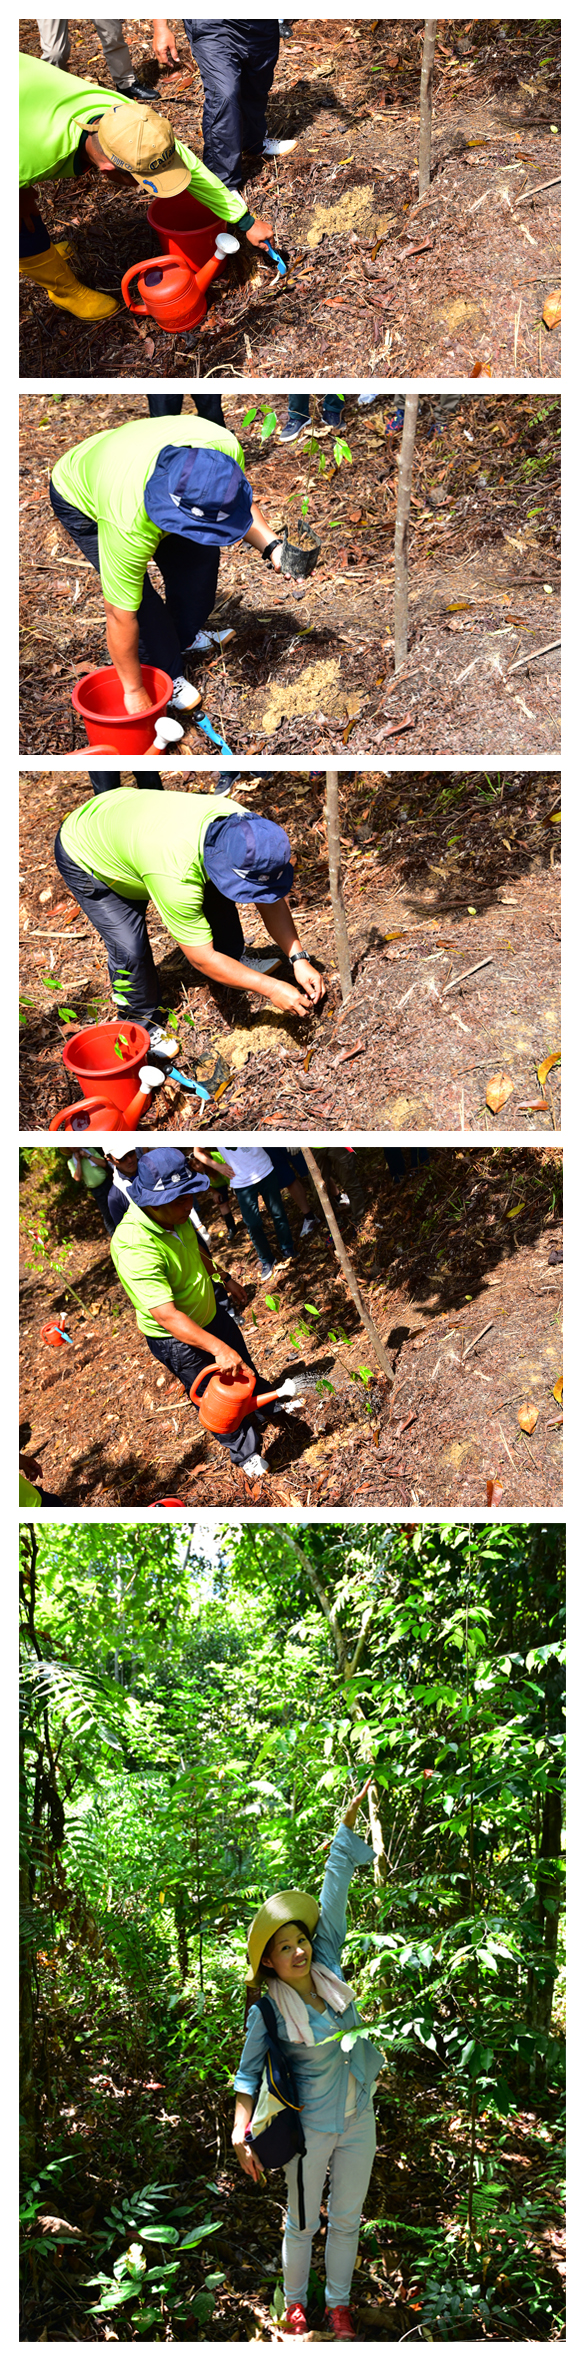 Seedlings are planted in Sarawak, Malasya